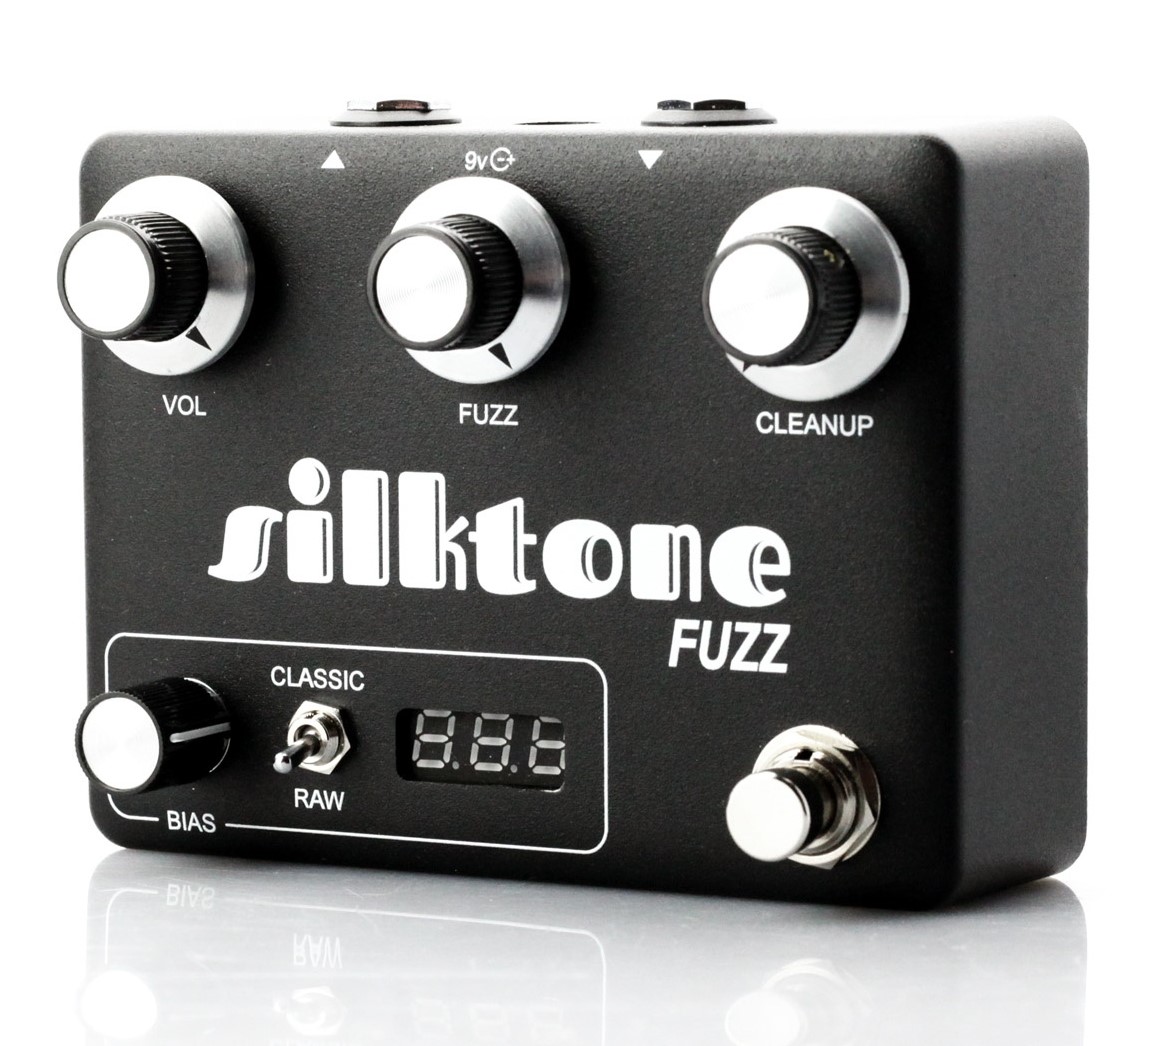 Silktone Fuzz Classic Black - Overdrive, distortion & fuzz effect pedal - Variation 1